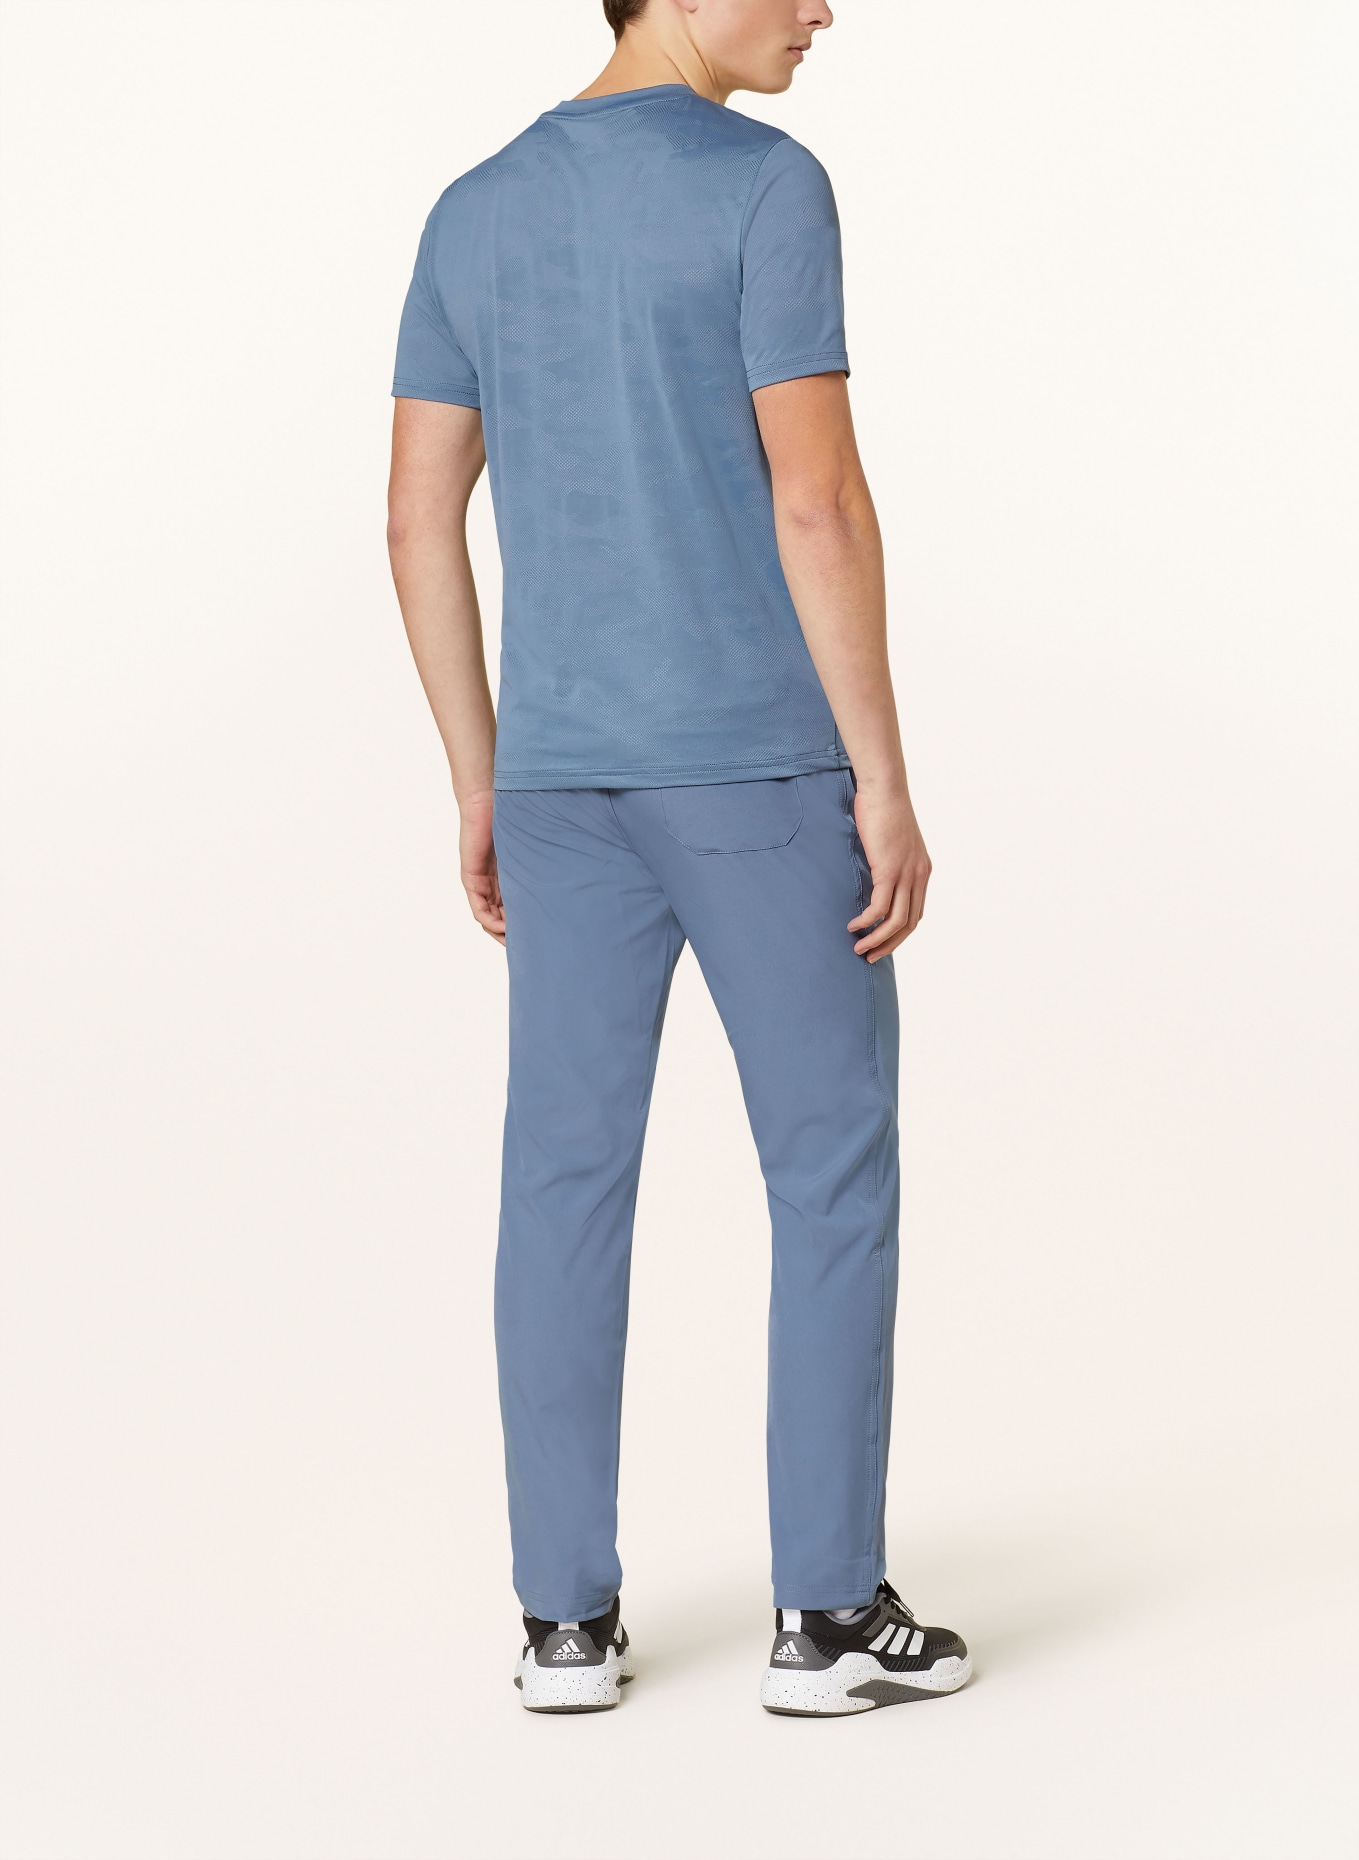 JOY sportswear T-Shirt ARNO, Farbe: BLAUGRAU (Bild 3)